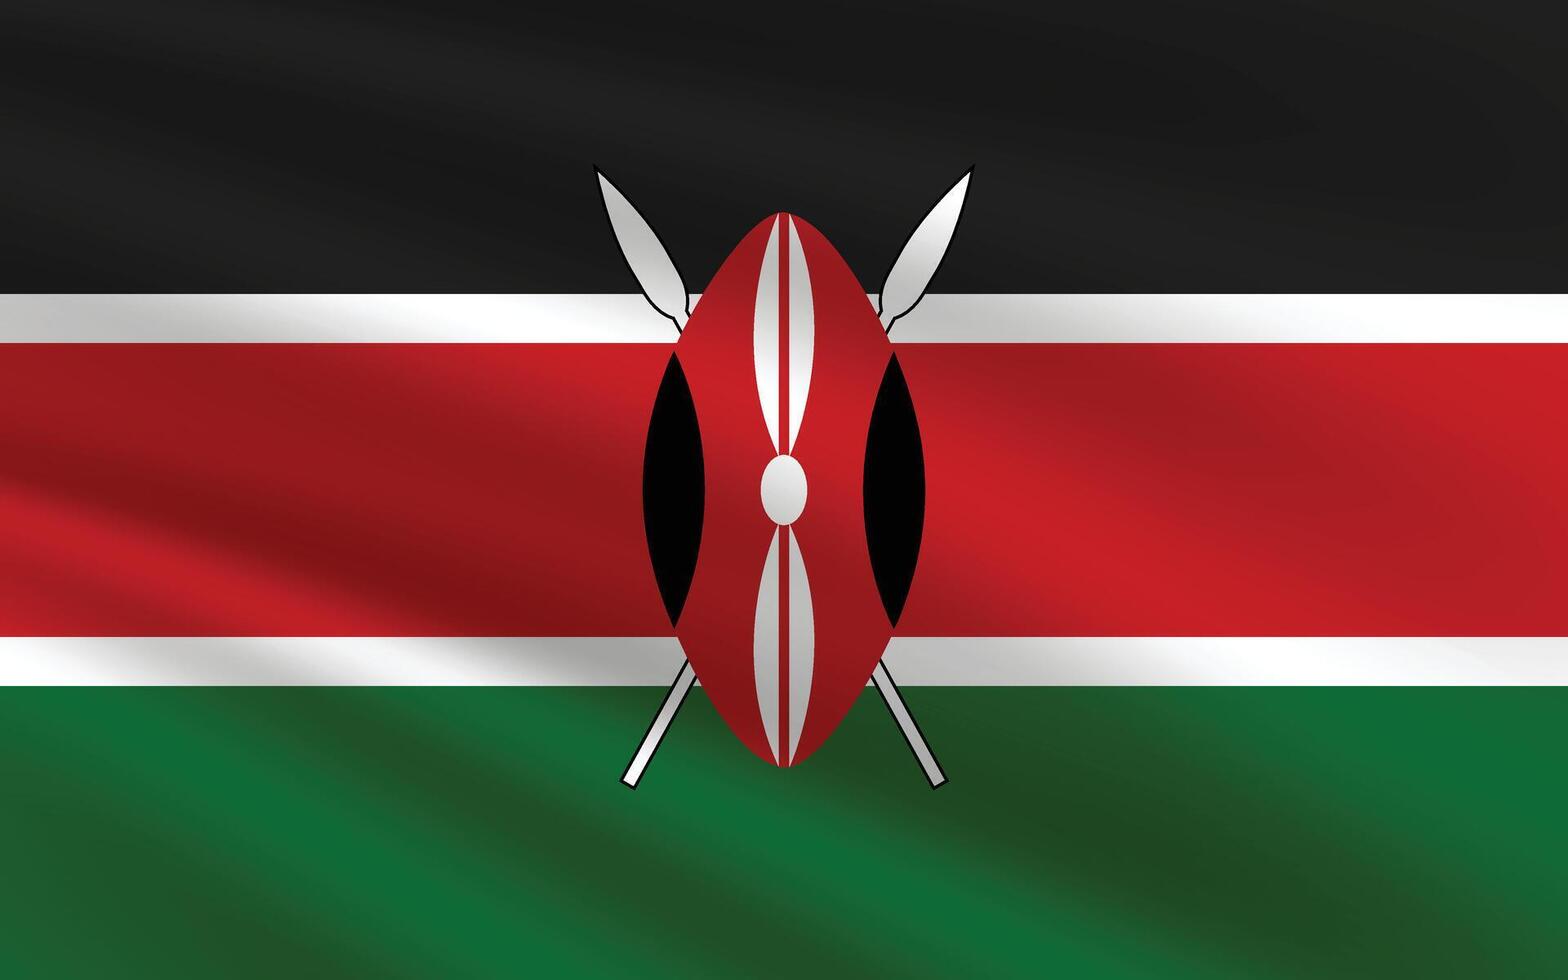 nationale drapeau de Kenya. Kenya drapeau. agitant Kenya drapeau. vecteur